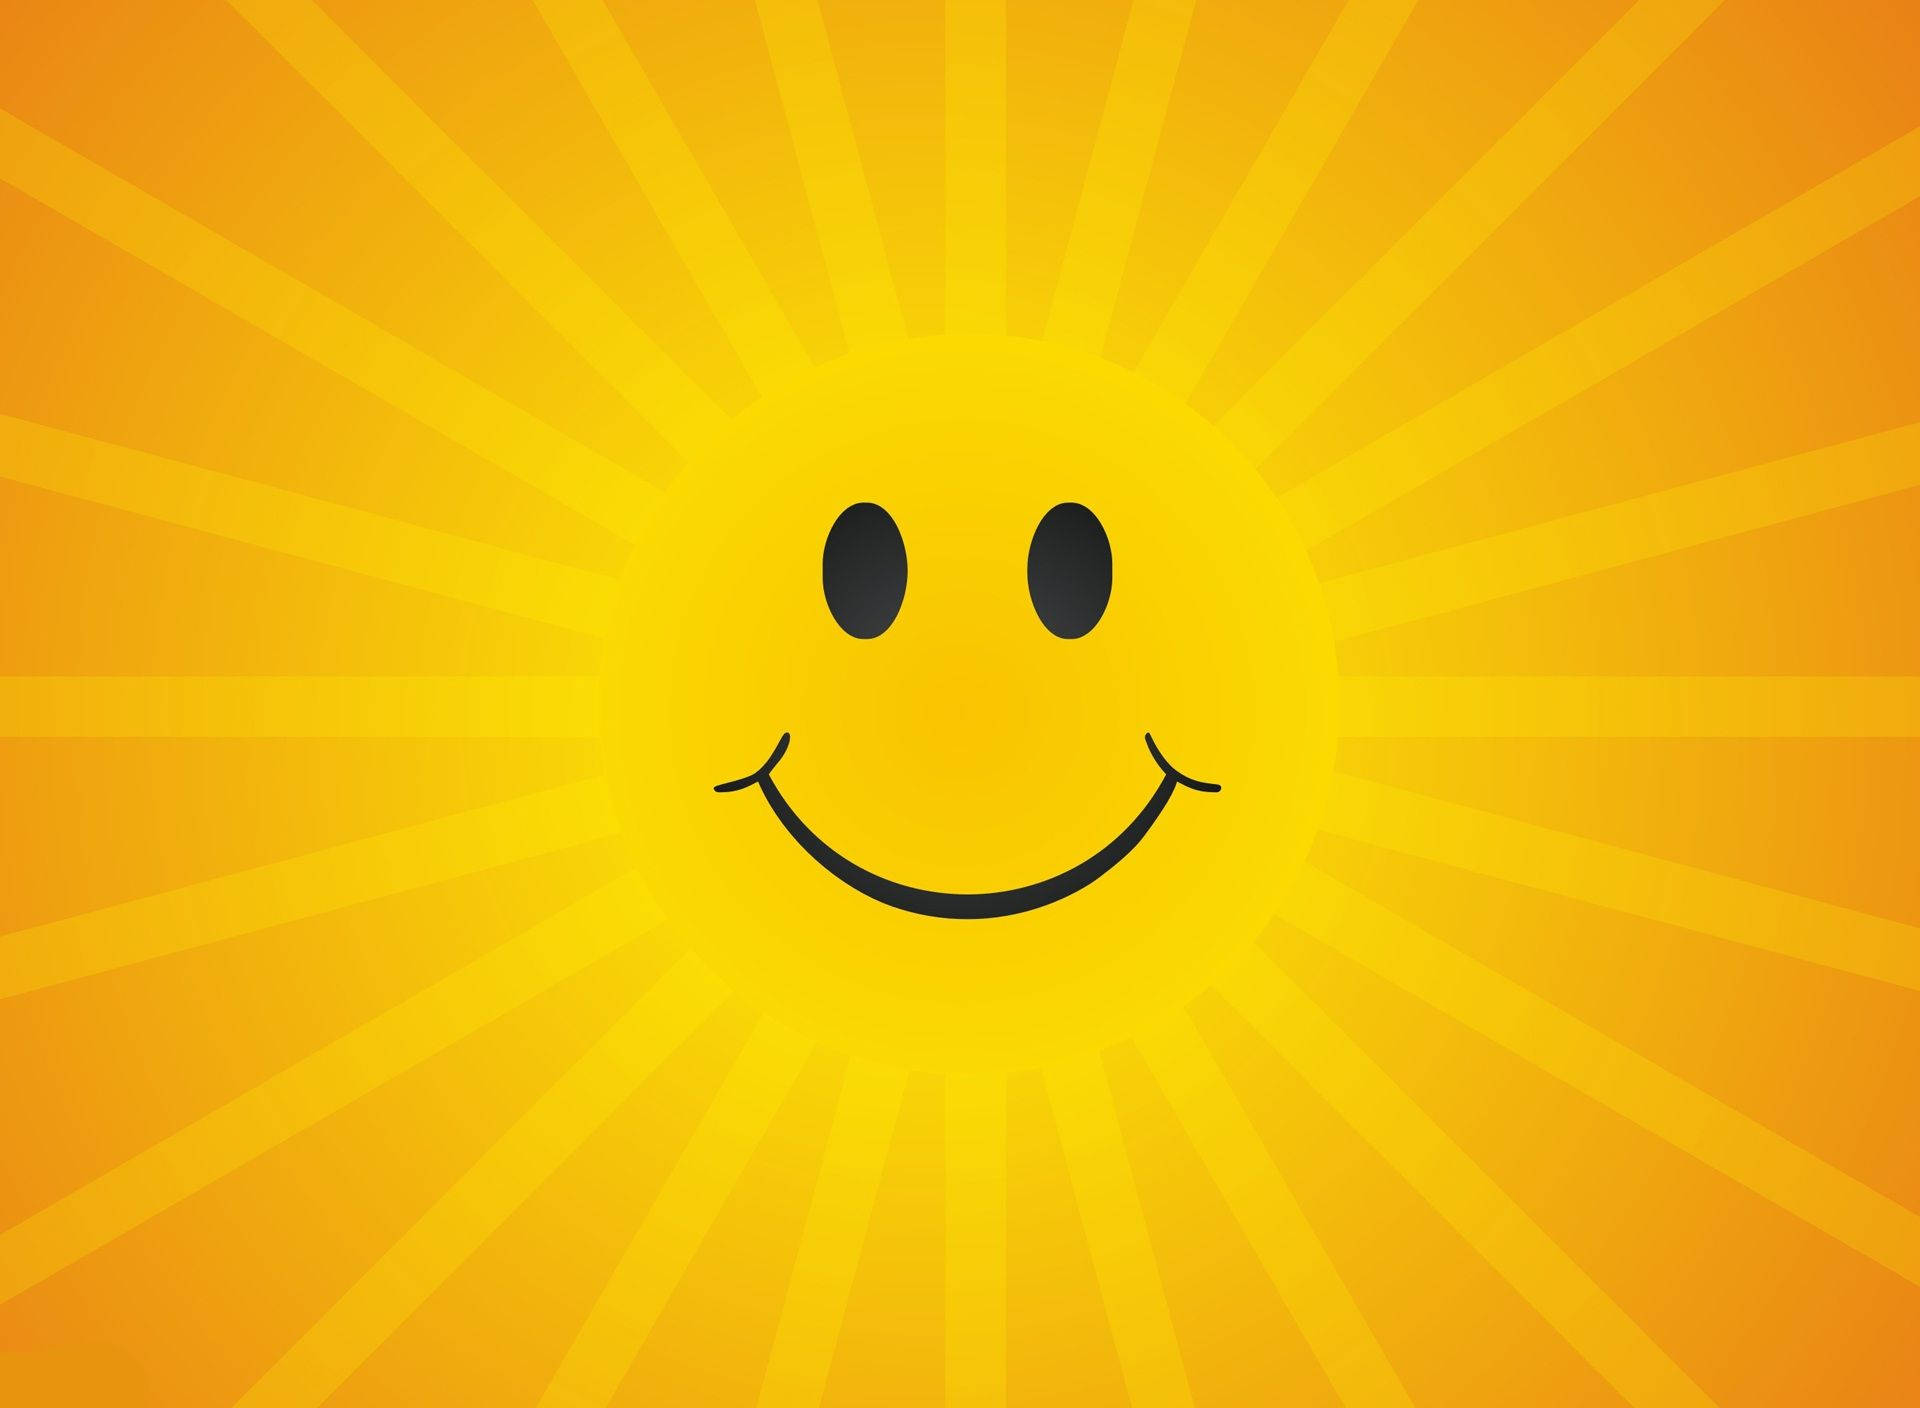 Vibrant Smiling Sun Illustration Background